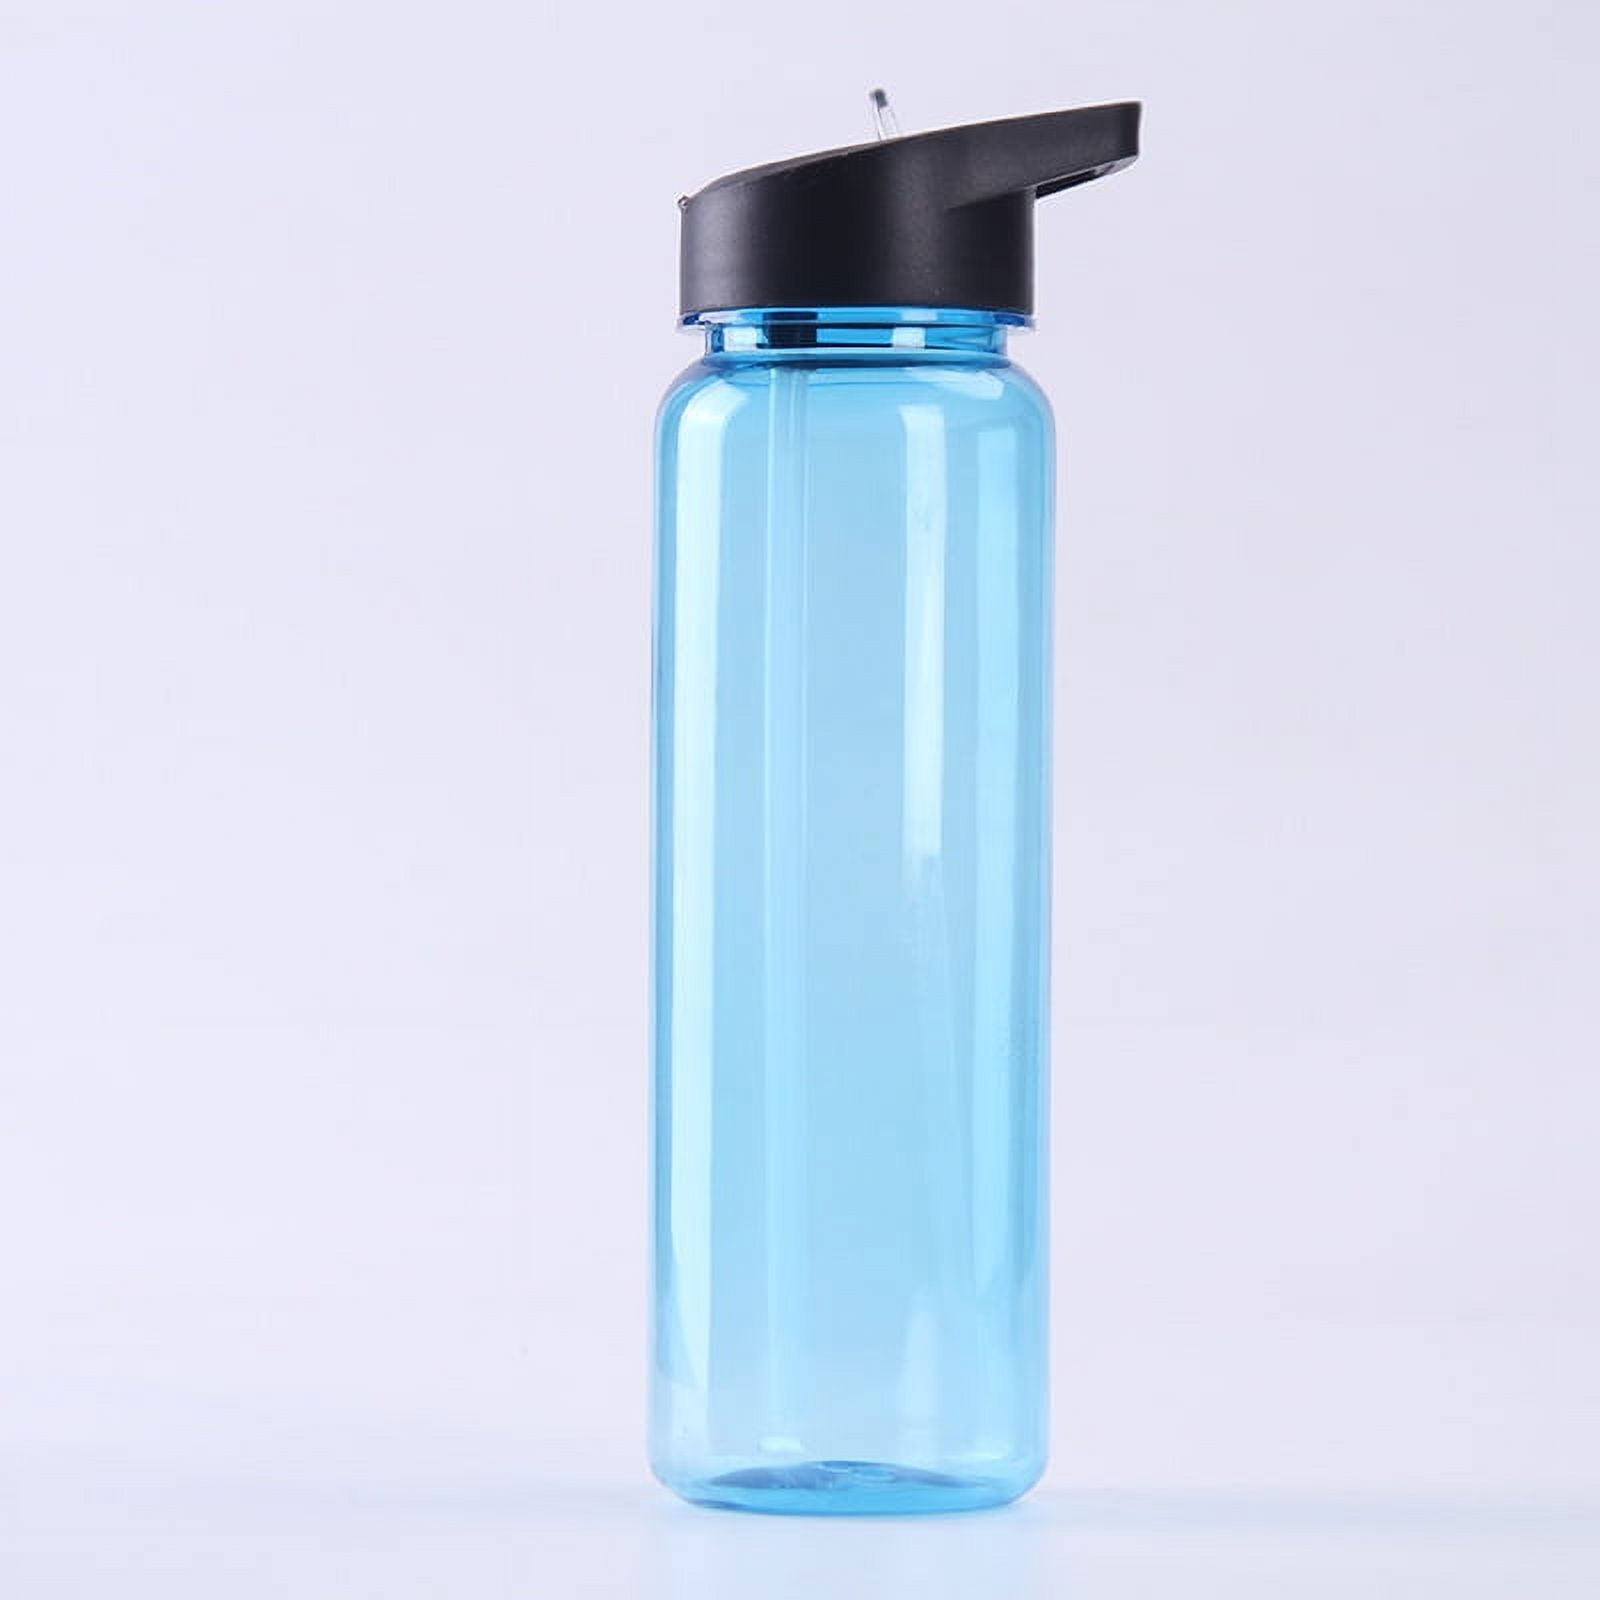 14 Pieces 27 Oz Plastic Water Bottles Bulk Gym Sports Adults Kids